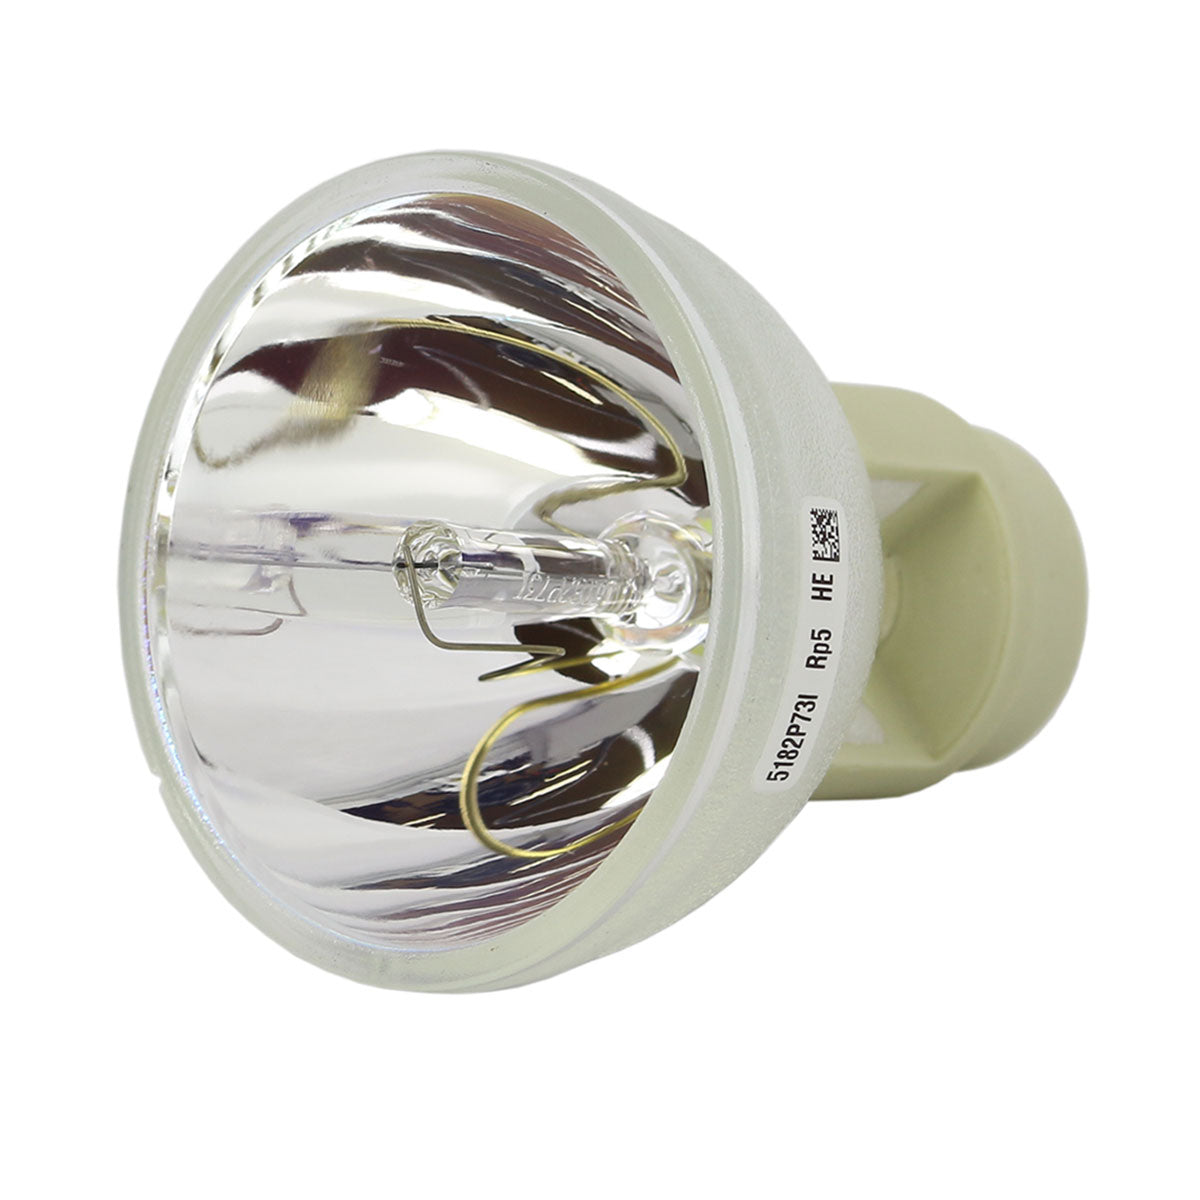 Viewsonic RLC-105 Osram Projector Bare Lamp